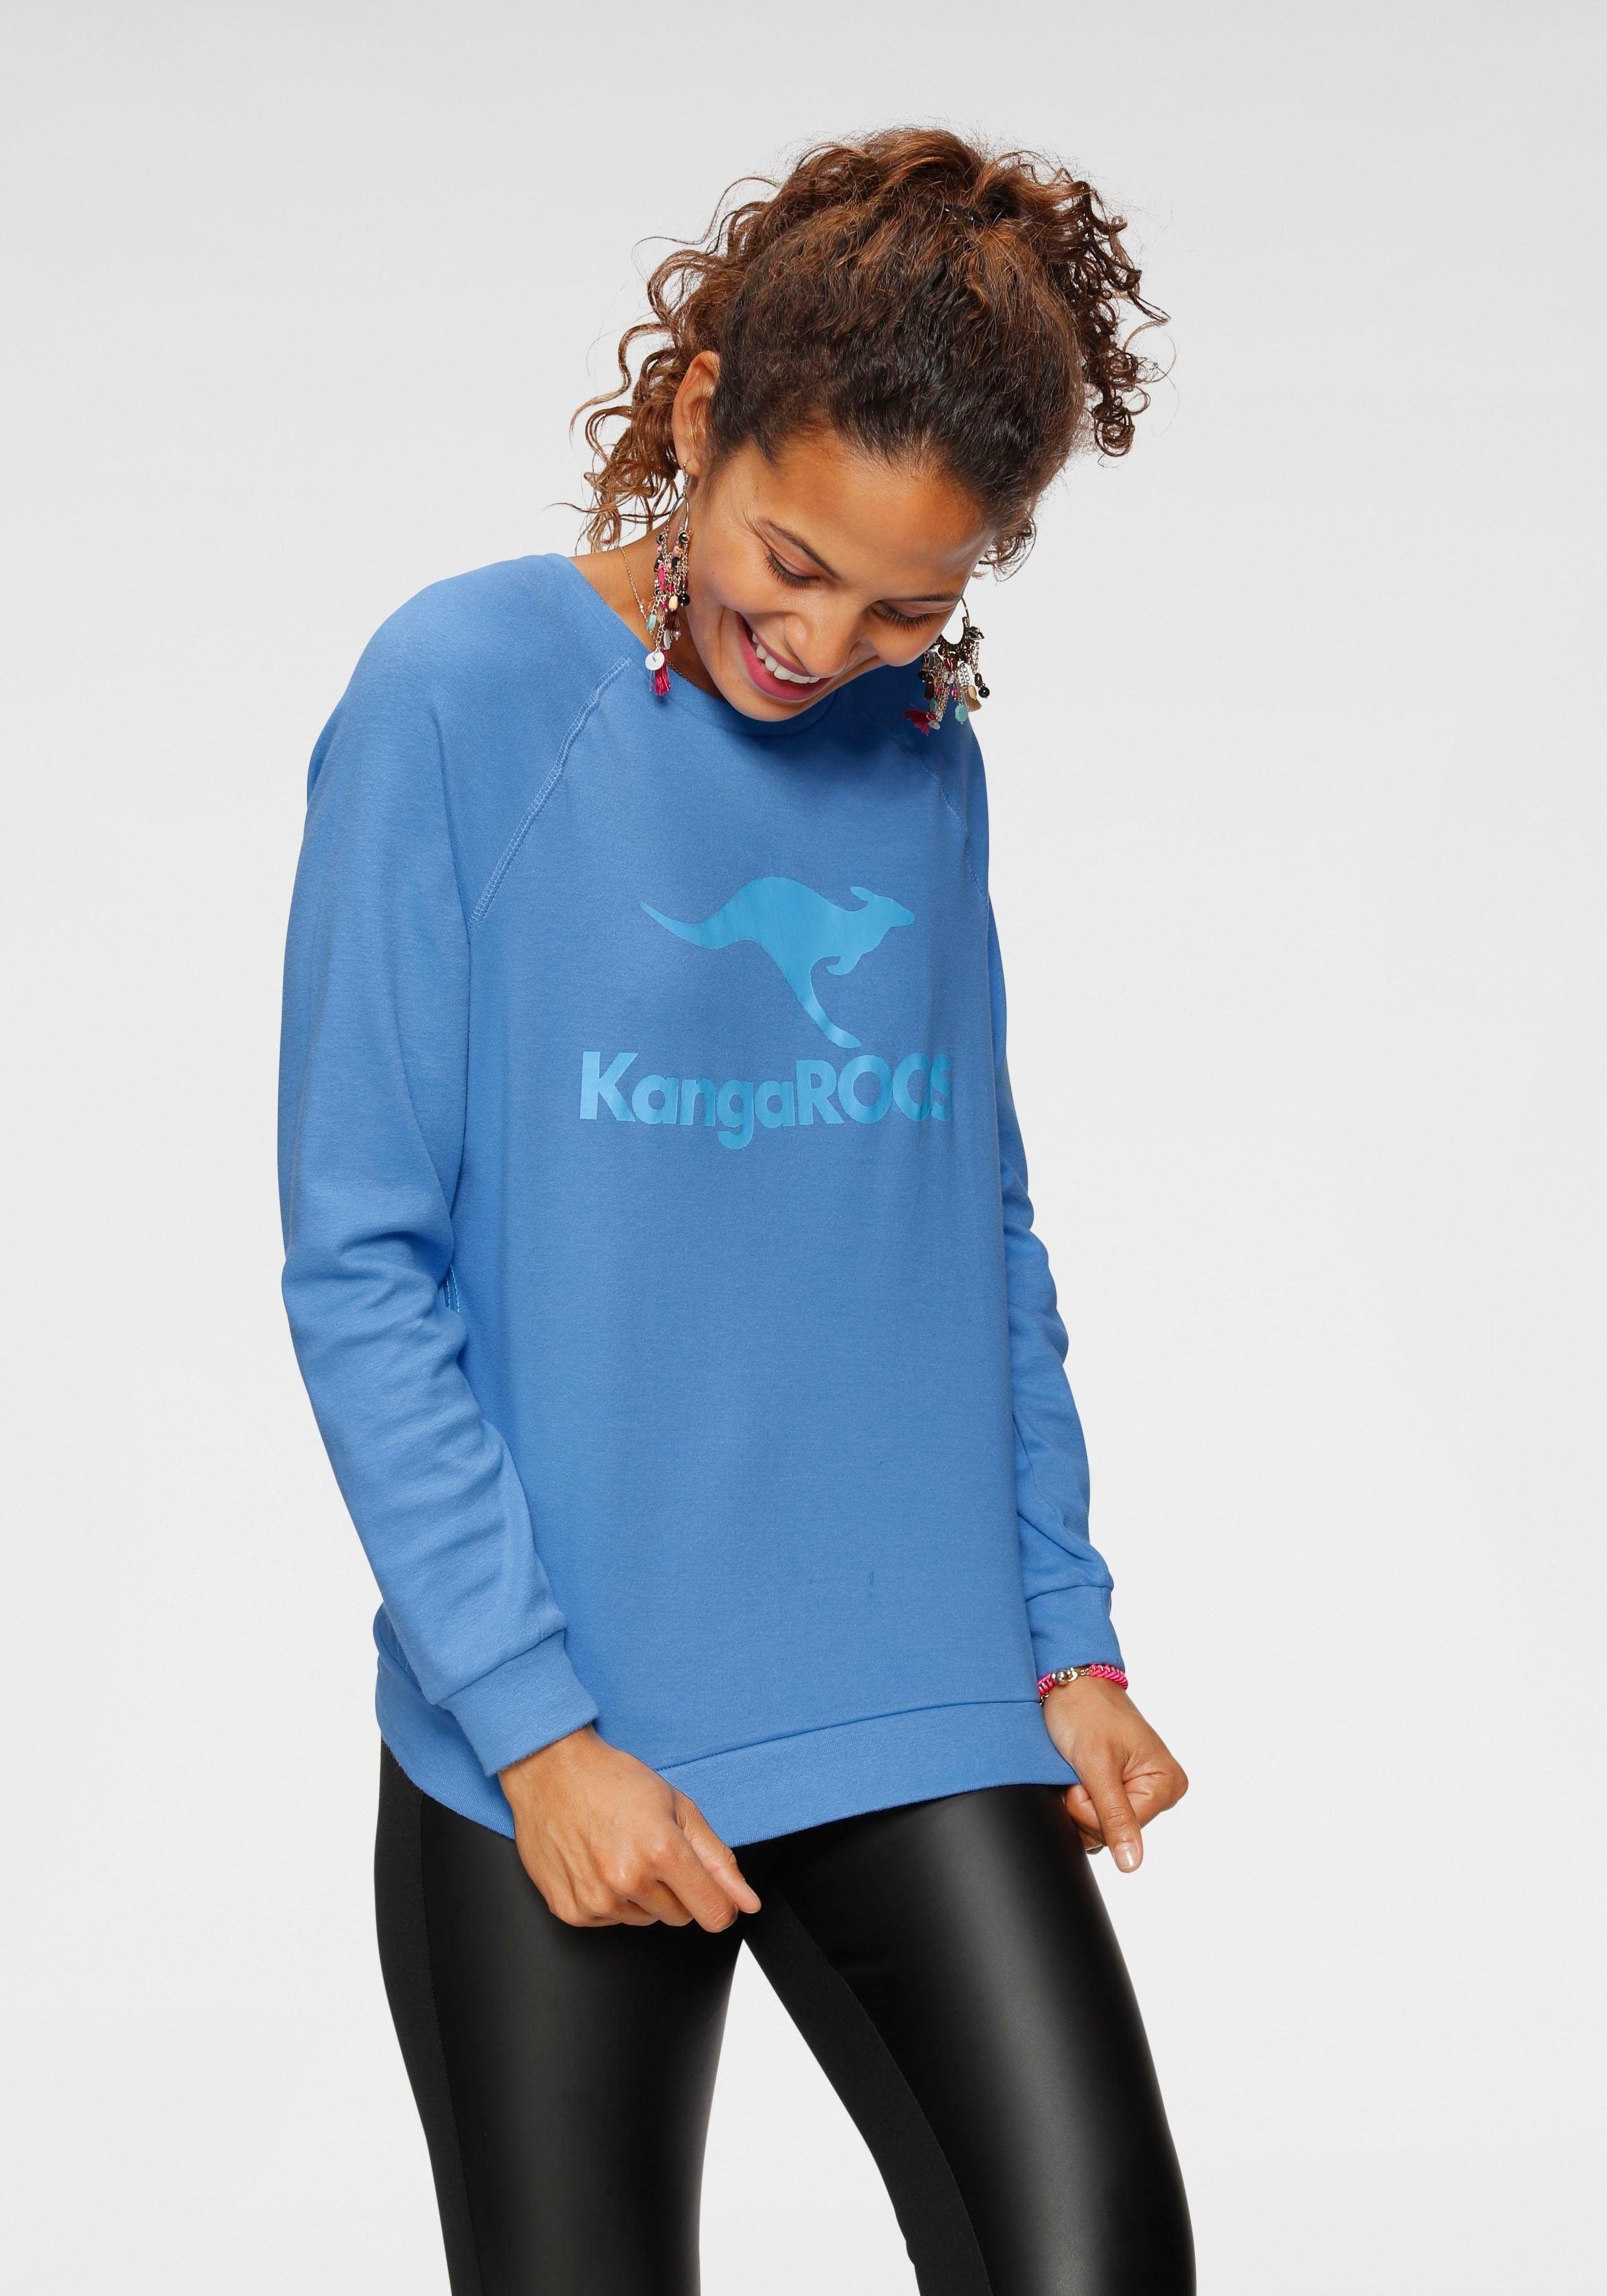 KangaROOS Sweater mit großem Label-Print vorne